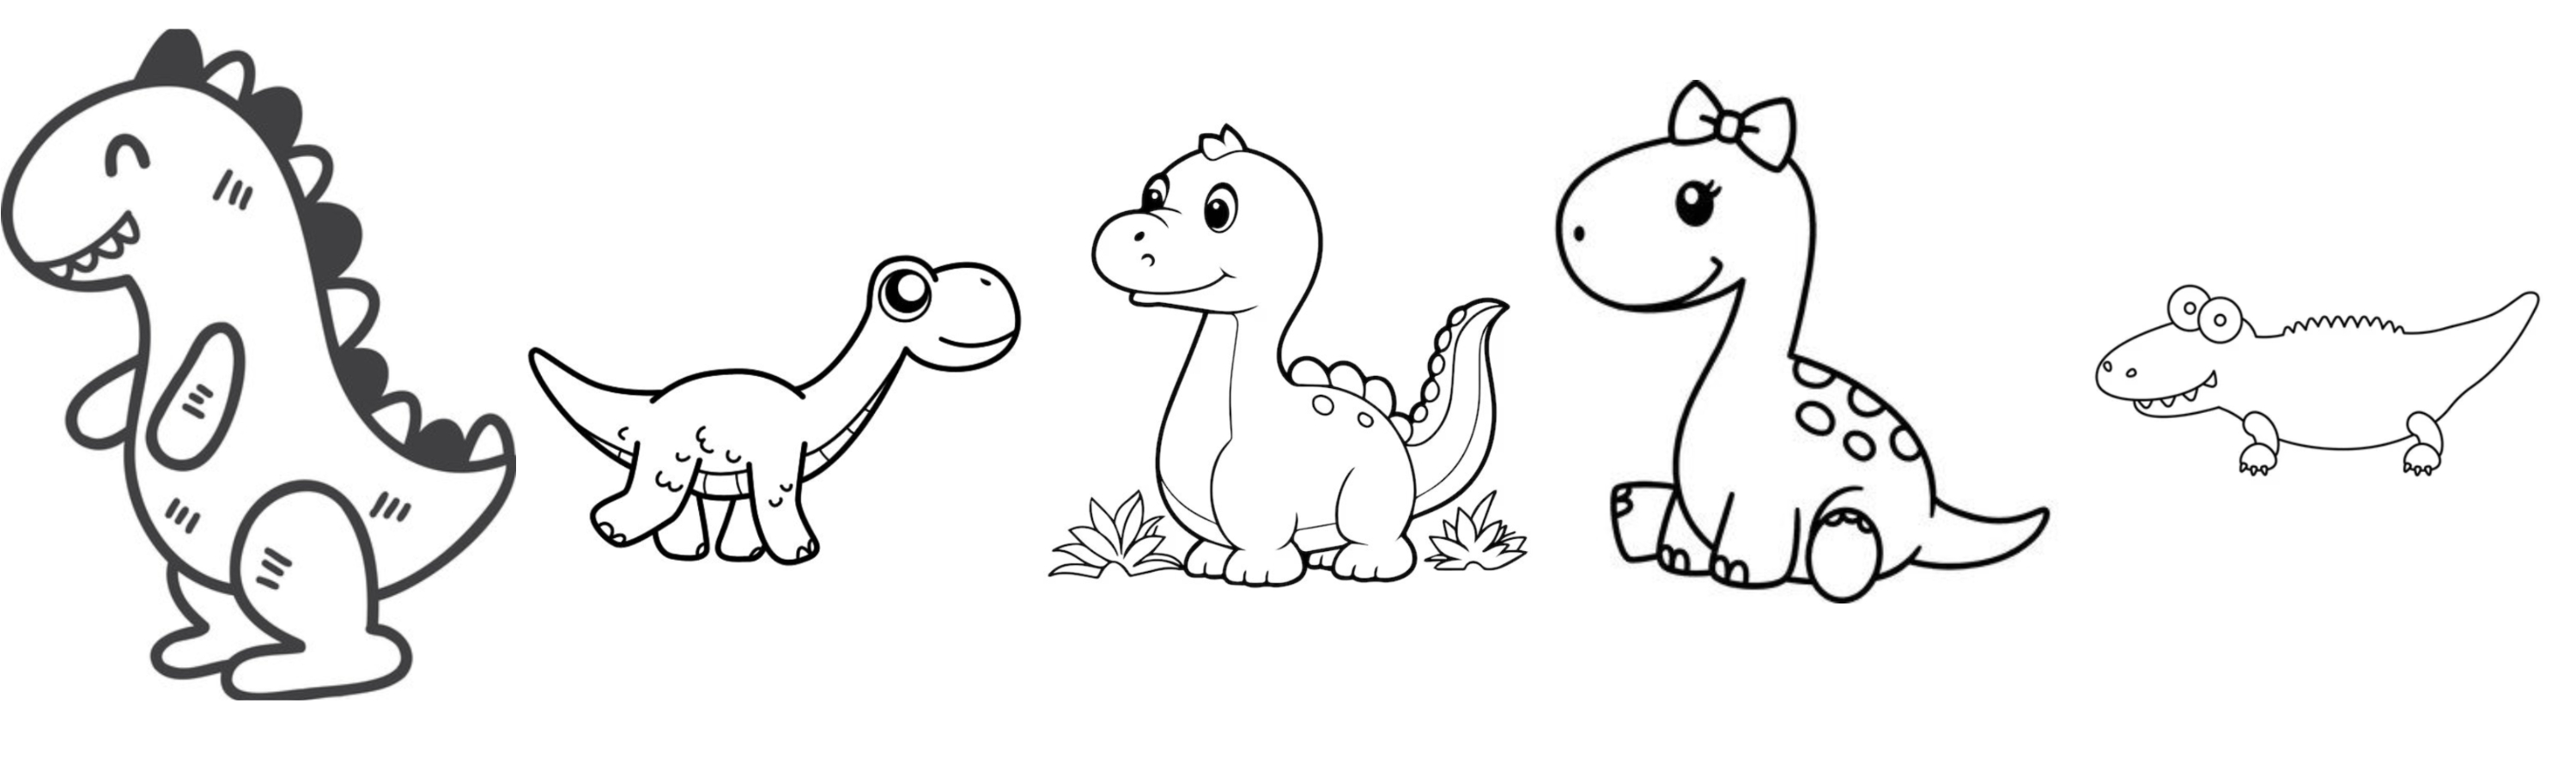 10 ideas de dibujos fáciles para hacer de dinosaurios